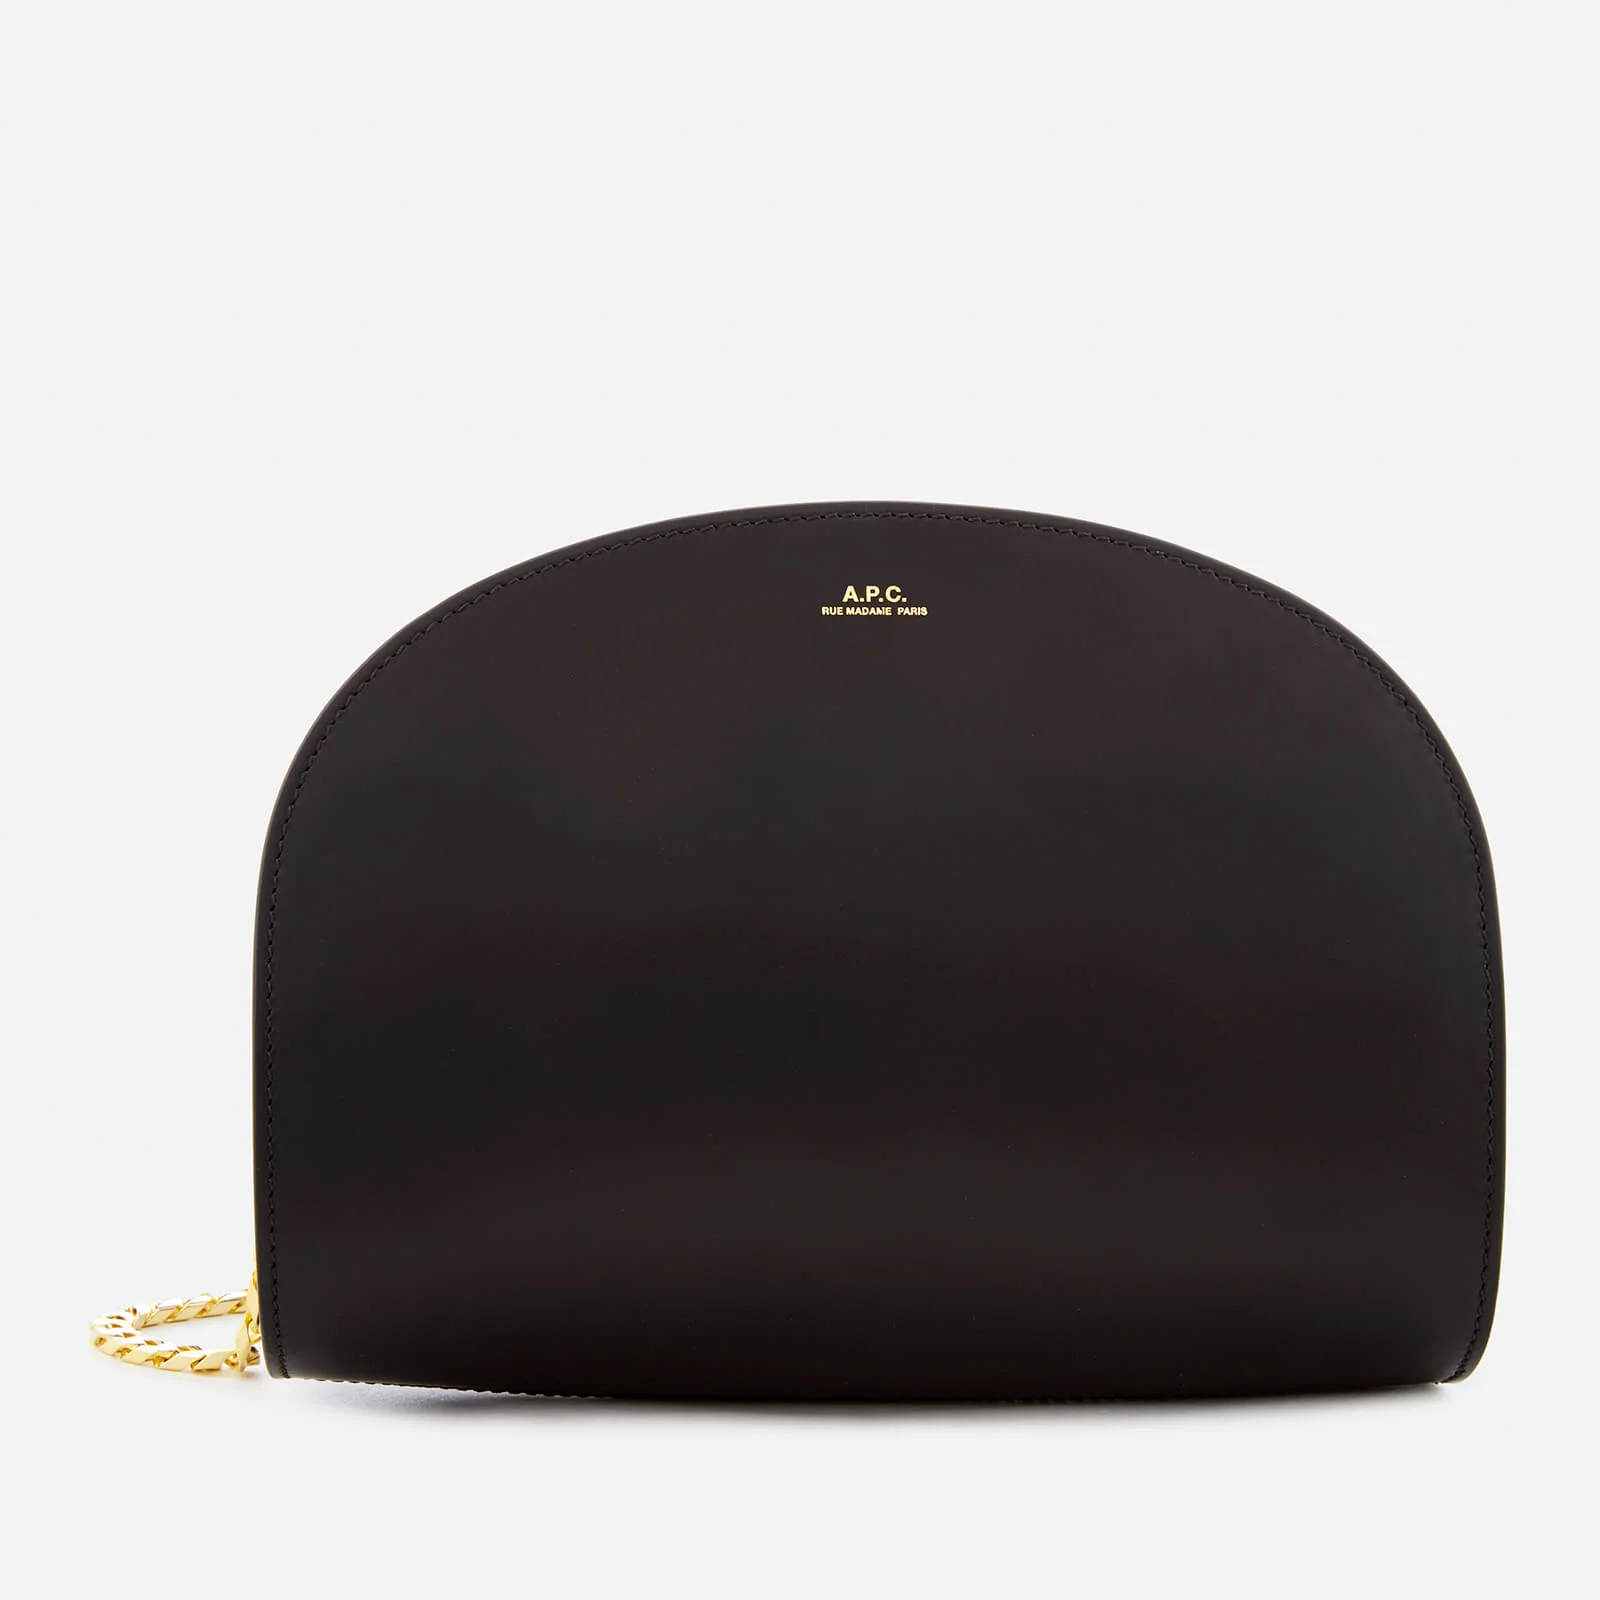 A.P.C. Women's Luna Bag with Gold Chain - Black Image 1